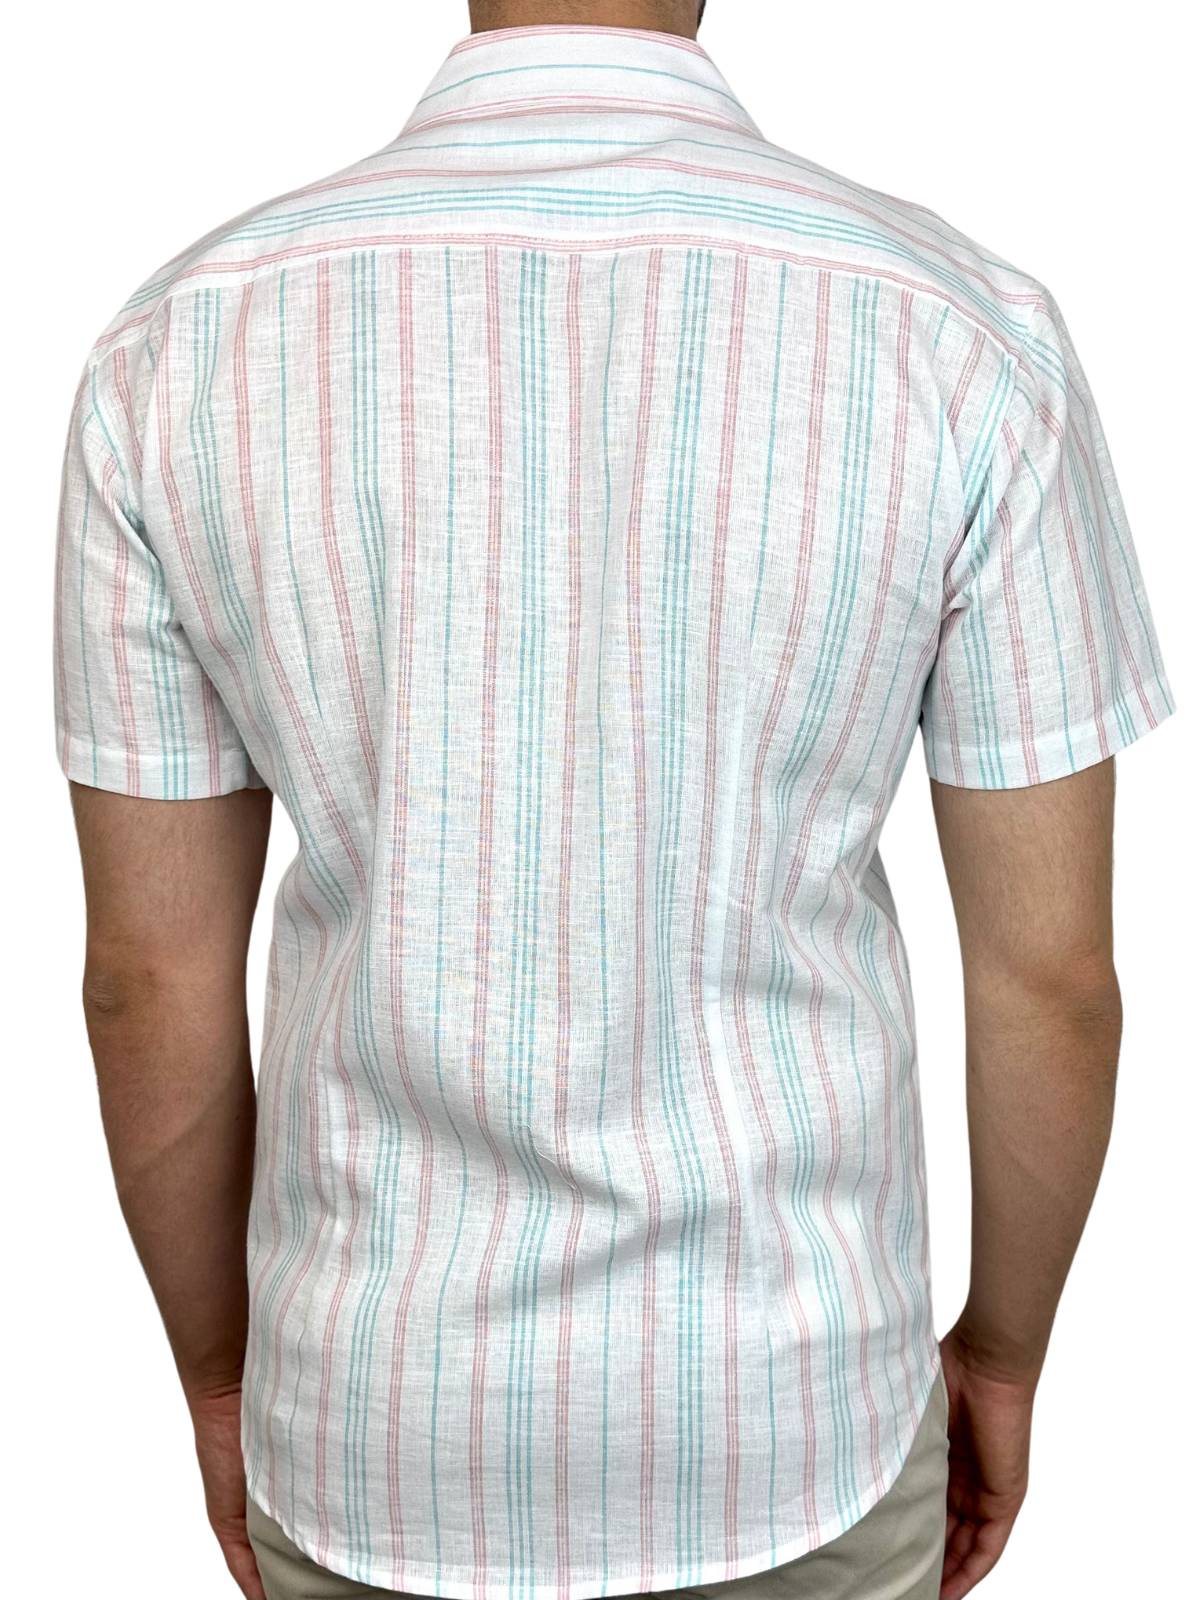 Positano Stripe Linen S/S Shirt - Blue/Pink/White